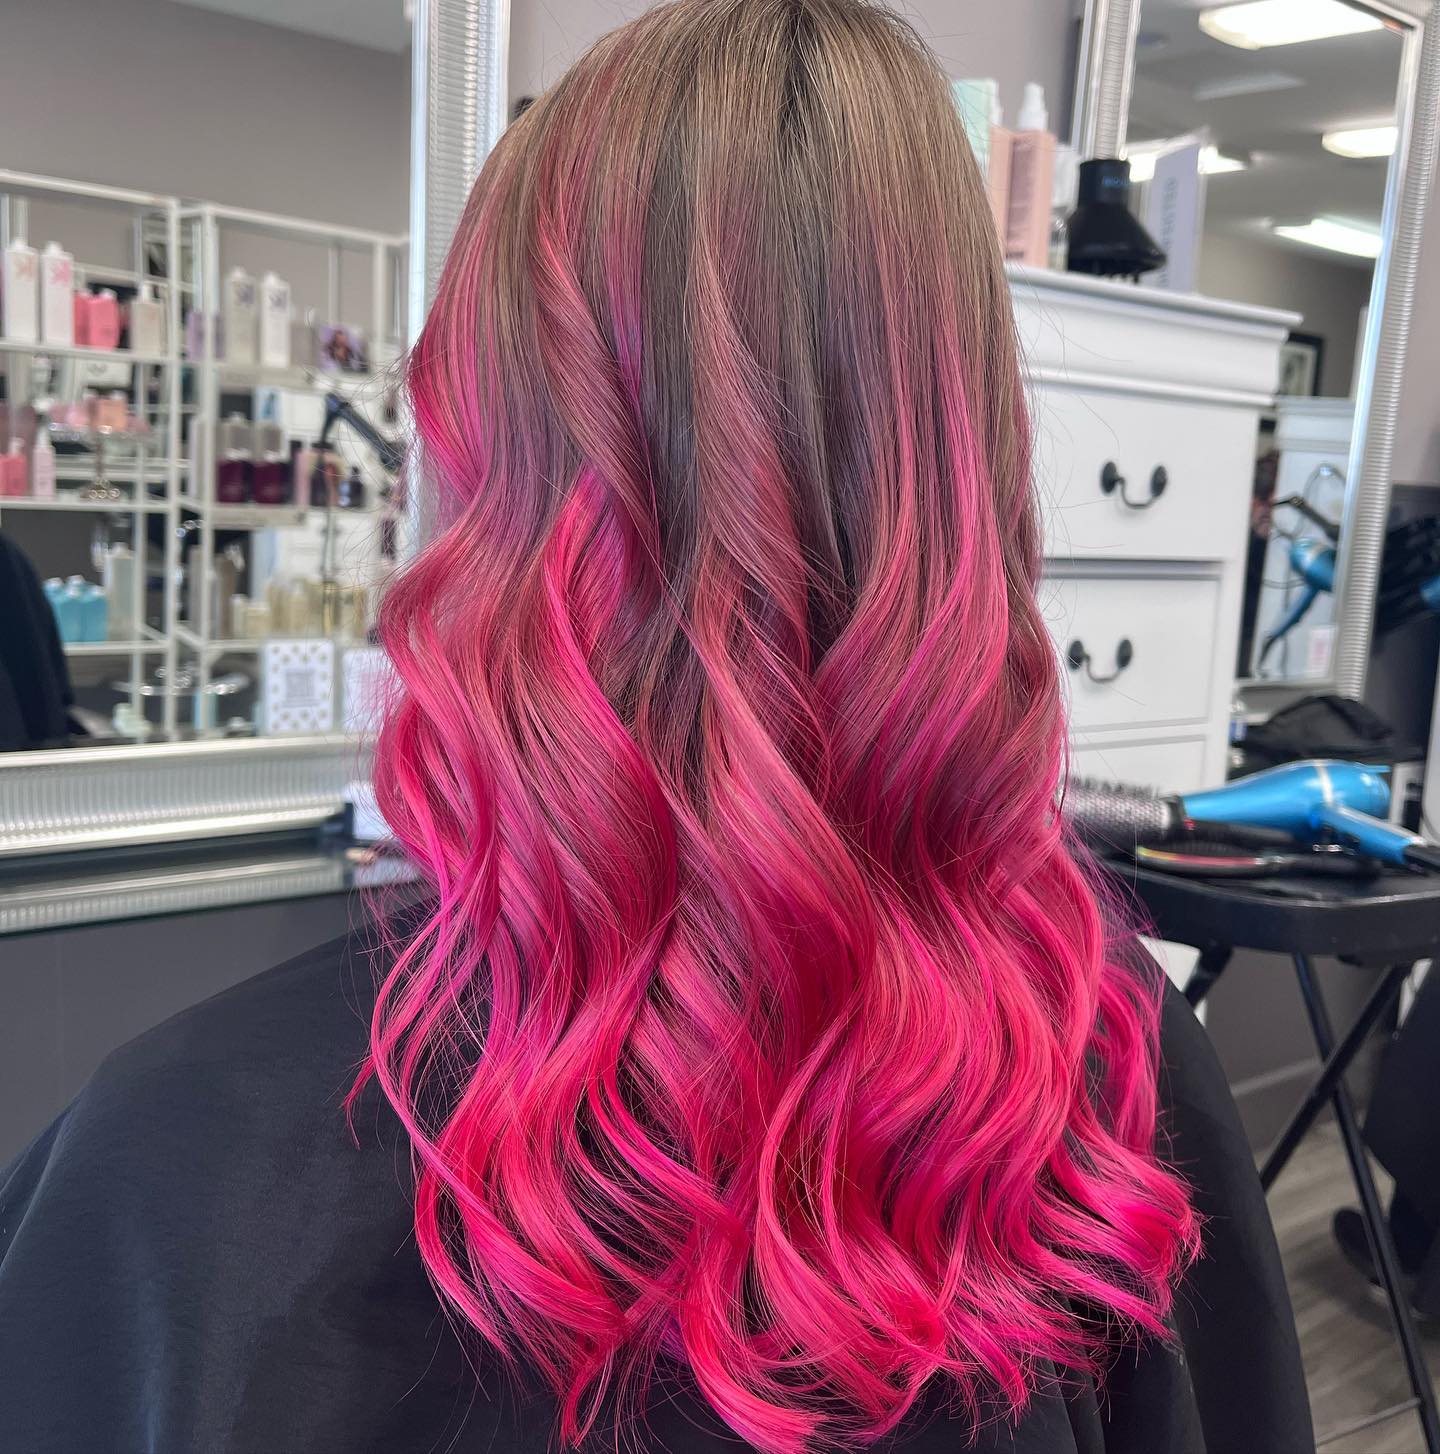 275834482 3040014372976554 7430378109297952407 n - Ombré hair rosa: 60 inspirações, trends